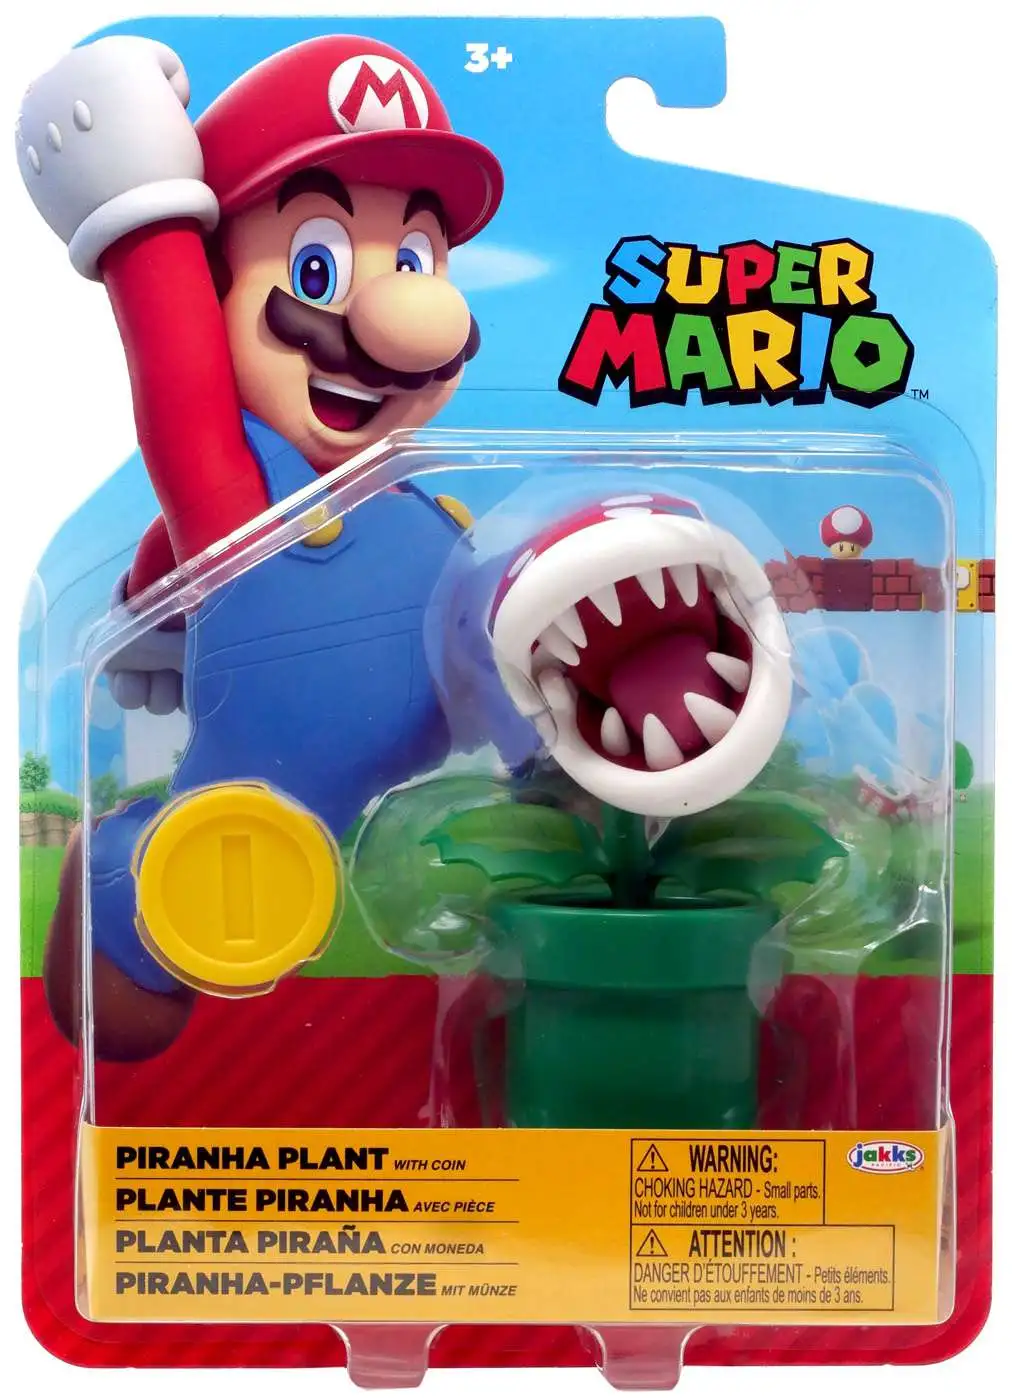 Nintendo Super Mario Bowser Jr, Wendy, Ludwig, Iggy Larry 2.5 Mini Figure  5-Pack Koopalings Jakks Pacific - ToyWiz